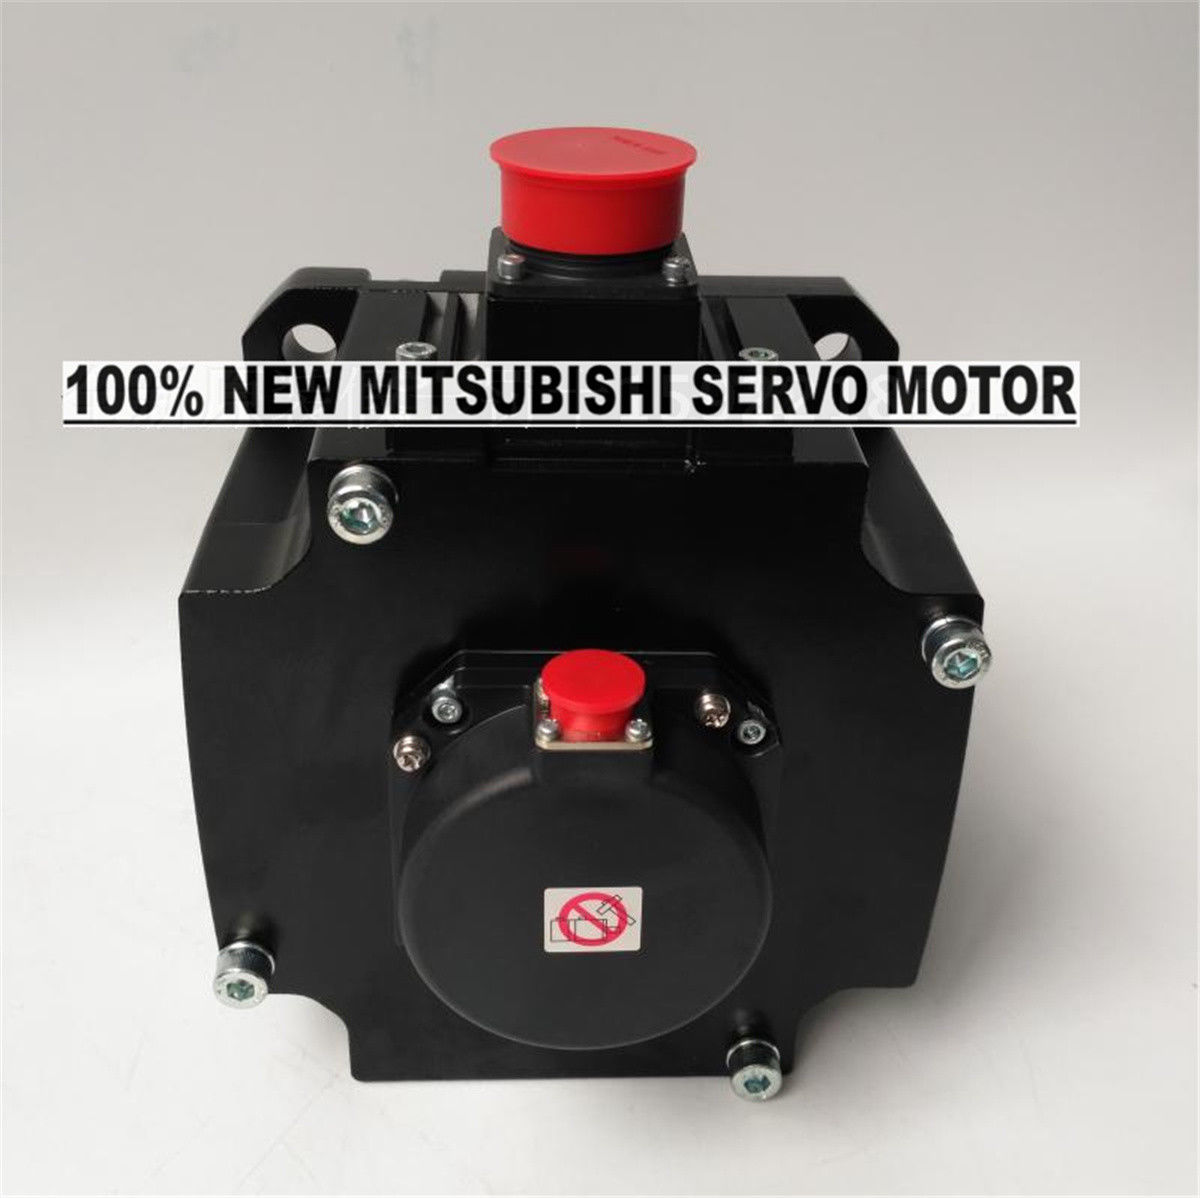 NEW Mitsubishi Servo Motor HG-SR201J in box HGSR201J - zum Schließen ins Bild klicken